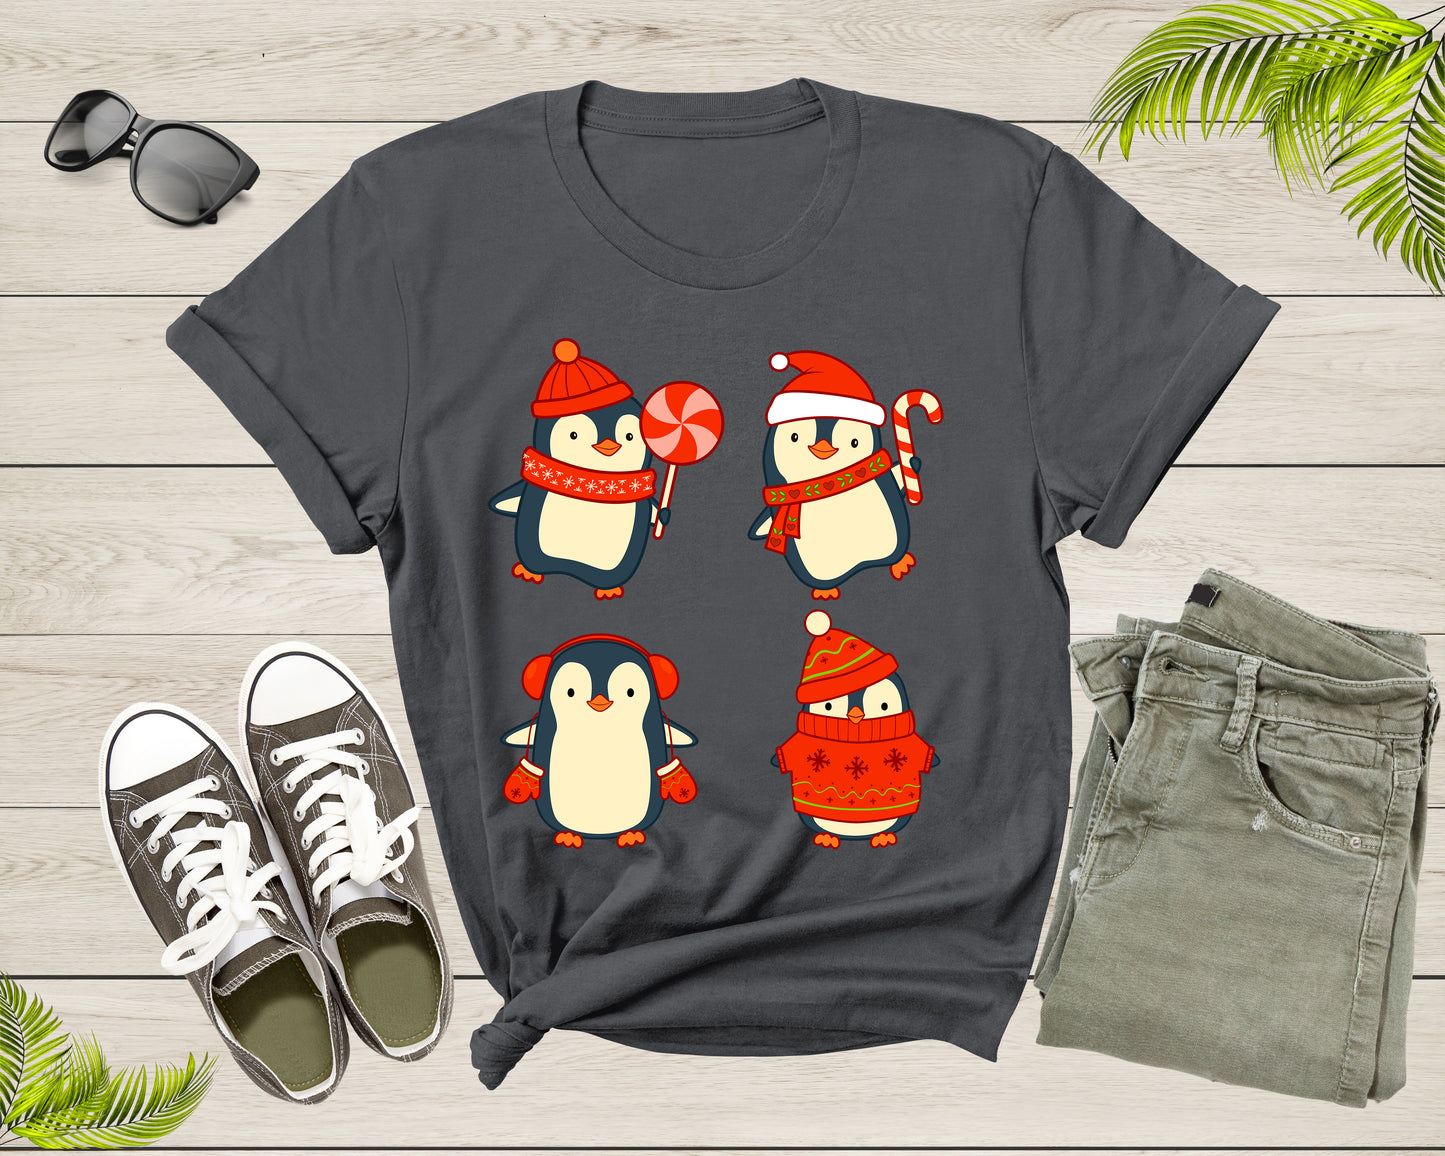 Cute Christmas Penguins Candy Canes Mittens Xmas Art Design T-Shirt Penguin Lover Gift T Shirt for Men Women Kids Boys Girls Graphic TShirt